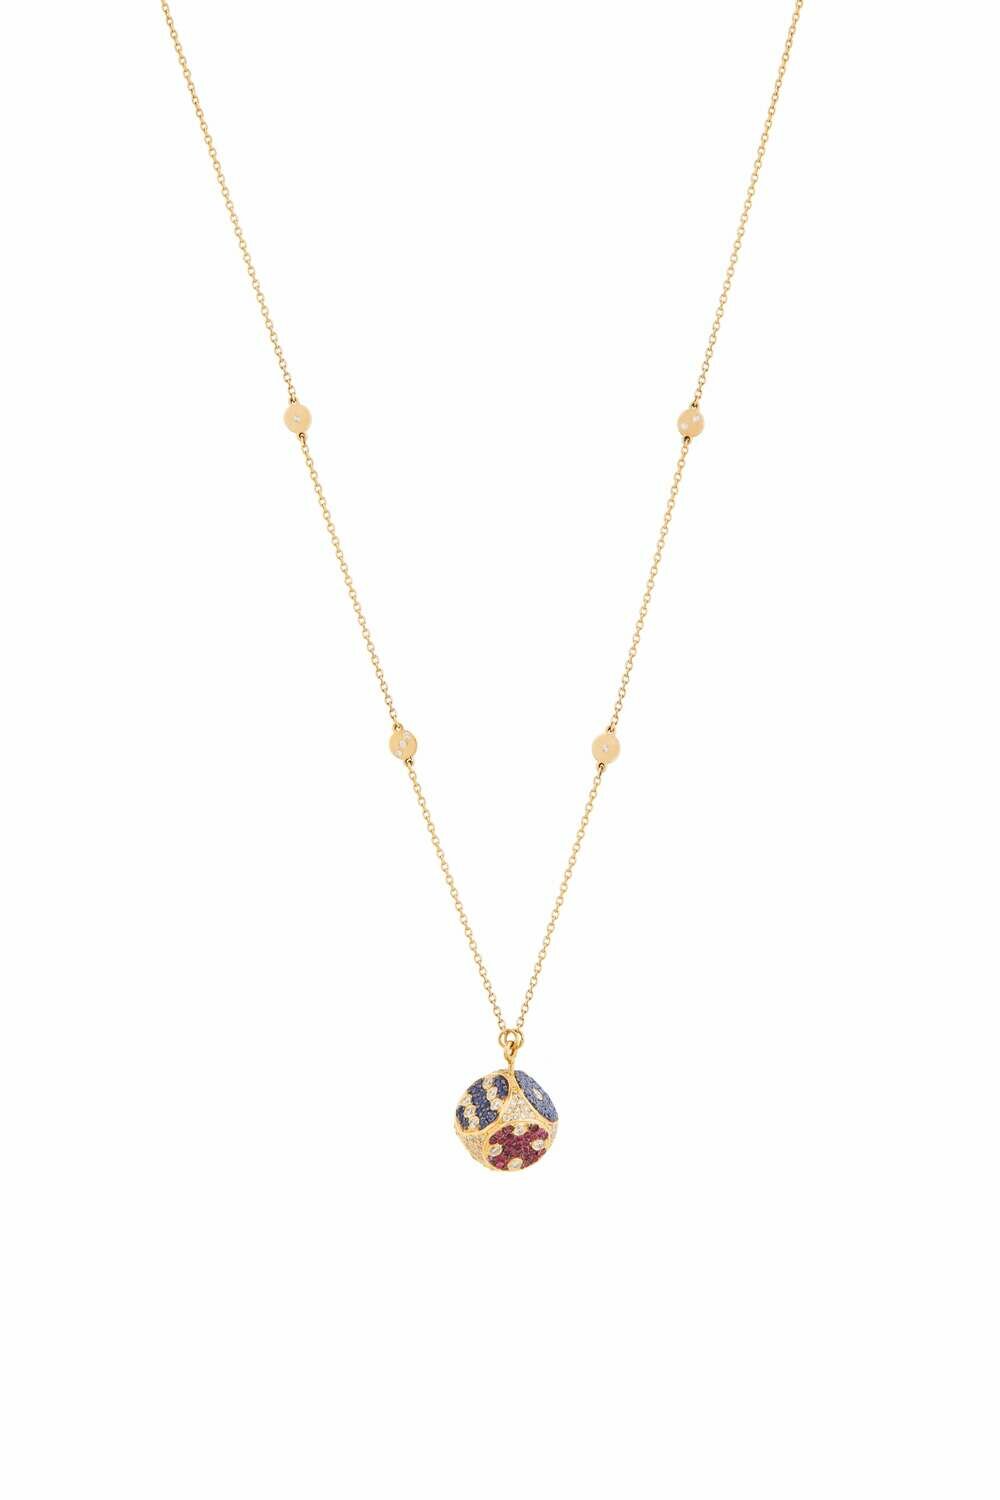 Dame Dice Diamond Necklace with Precious Colored Stones